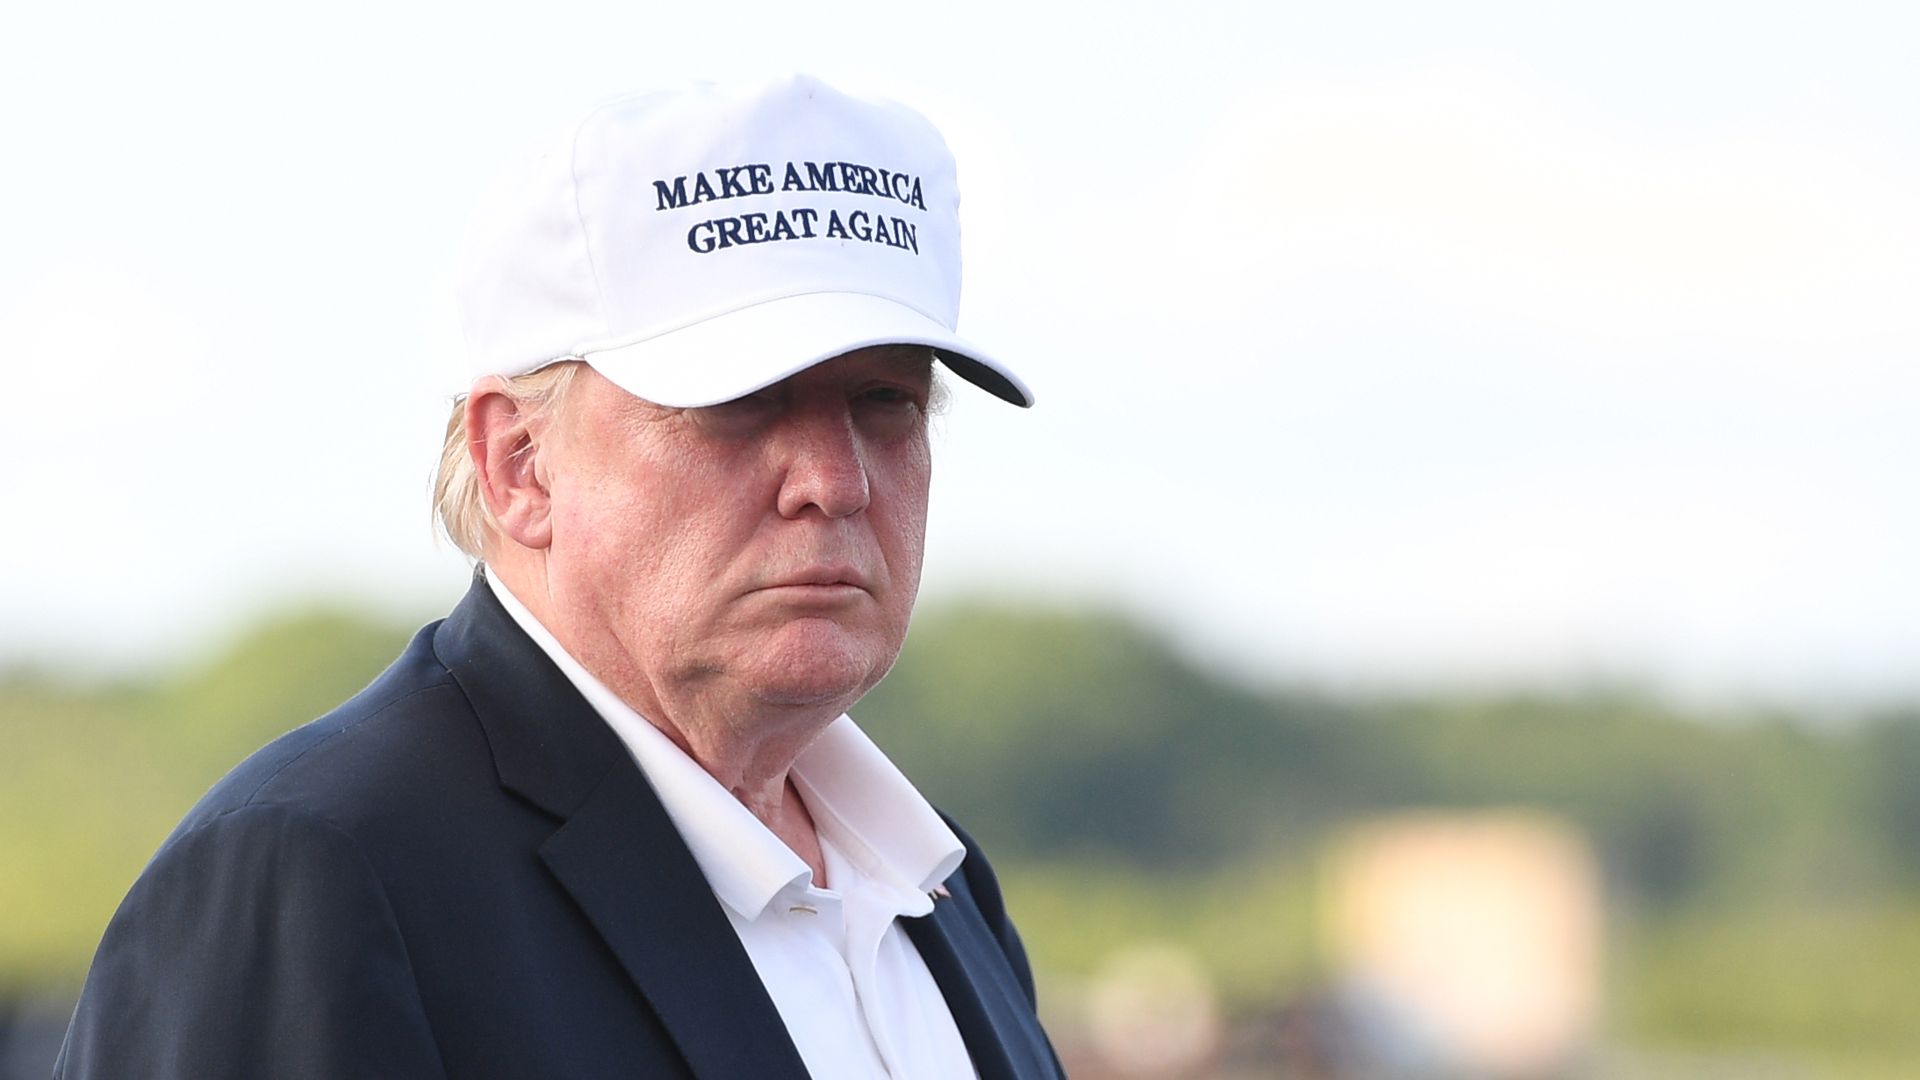 Trump wearing MAGA hat.